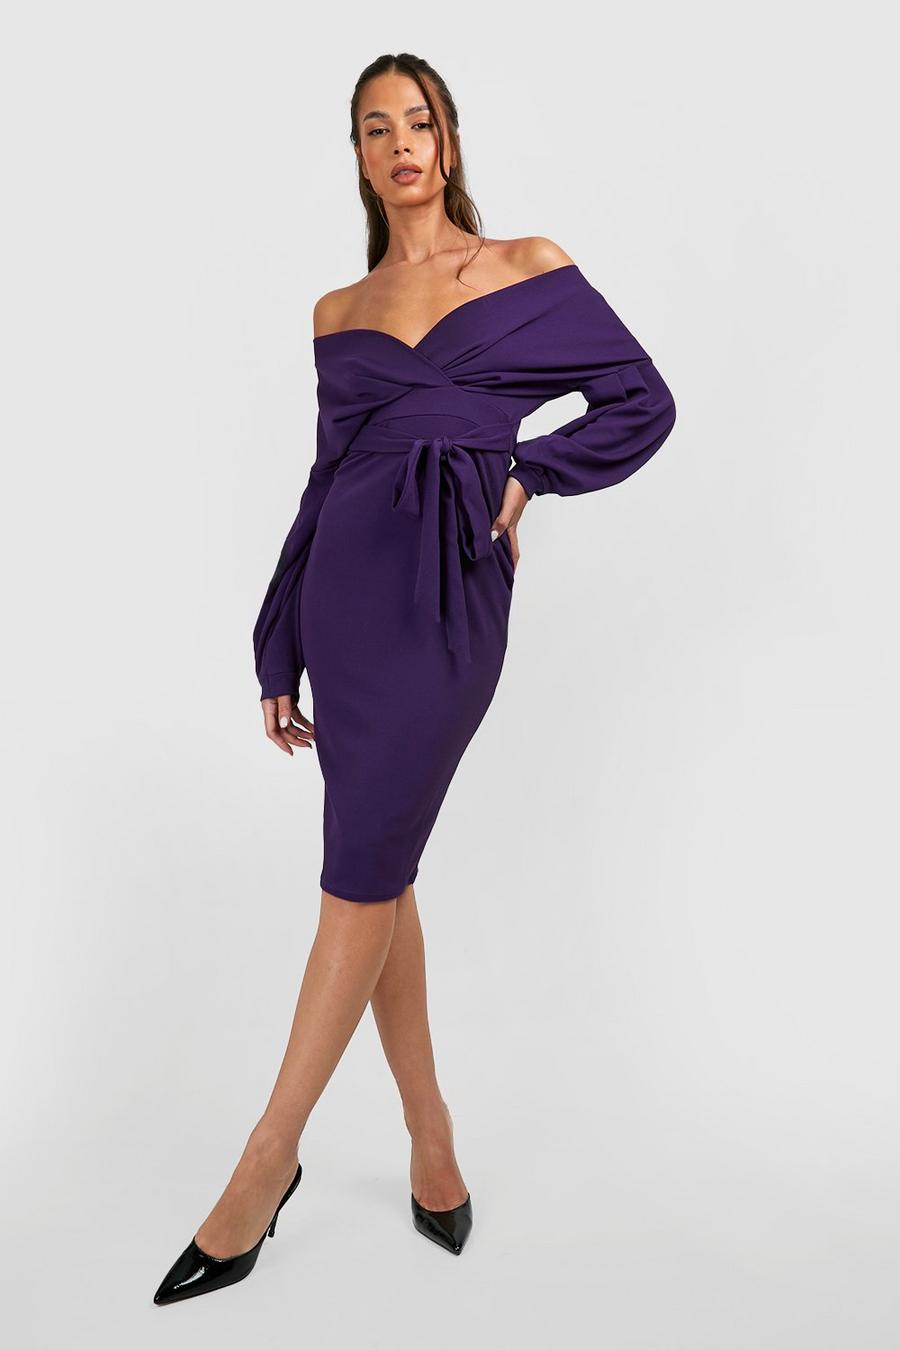 Jewel purple lila Off the Shoulder Wrap Midi Dress